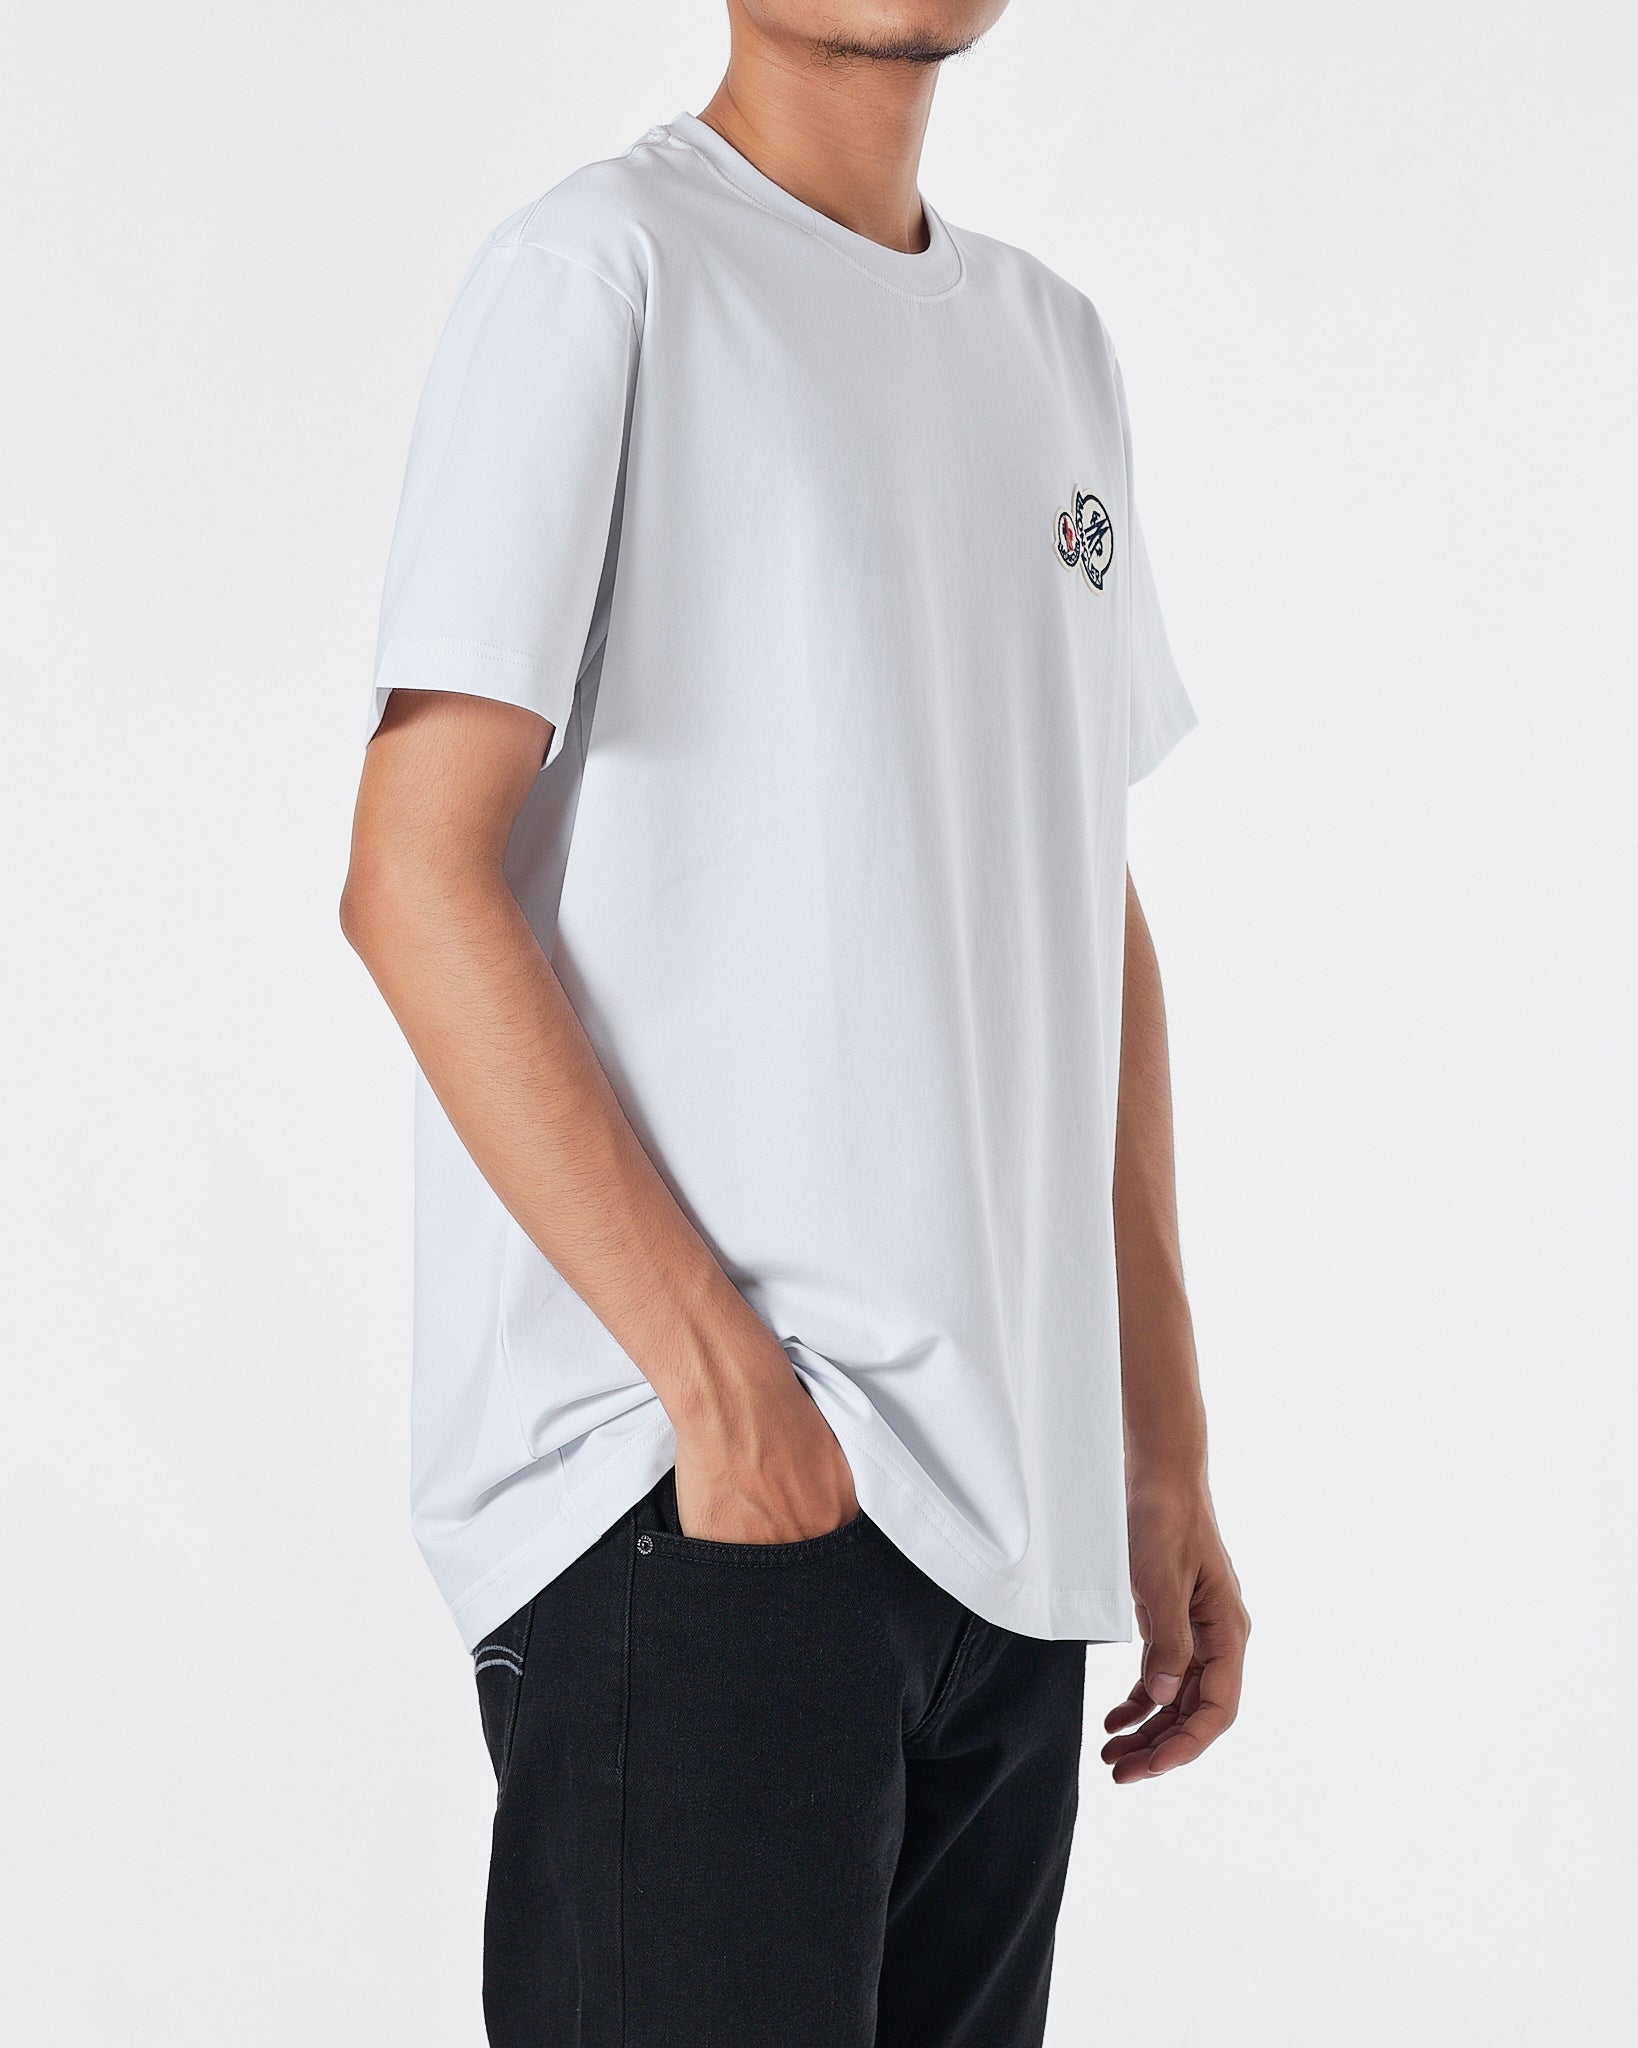 MON Logo Embroidered Men White T-Shirt 15.90